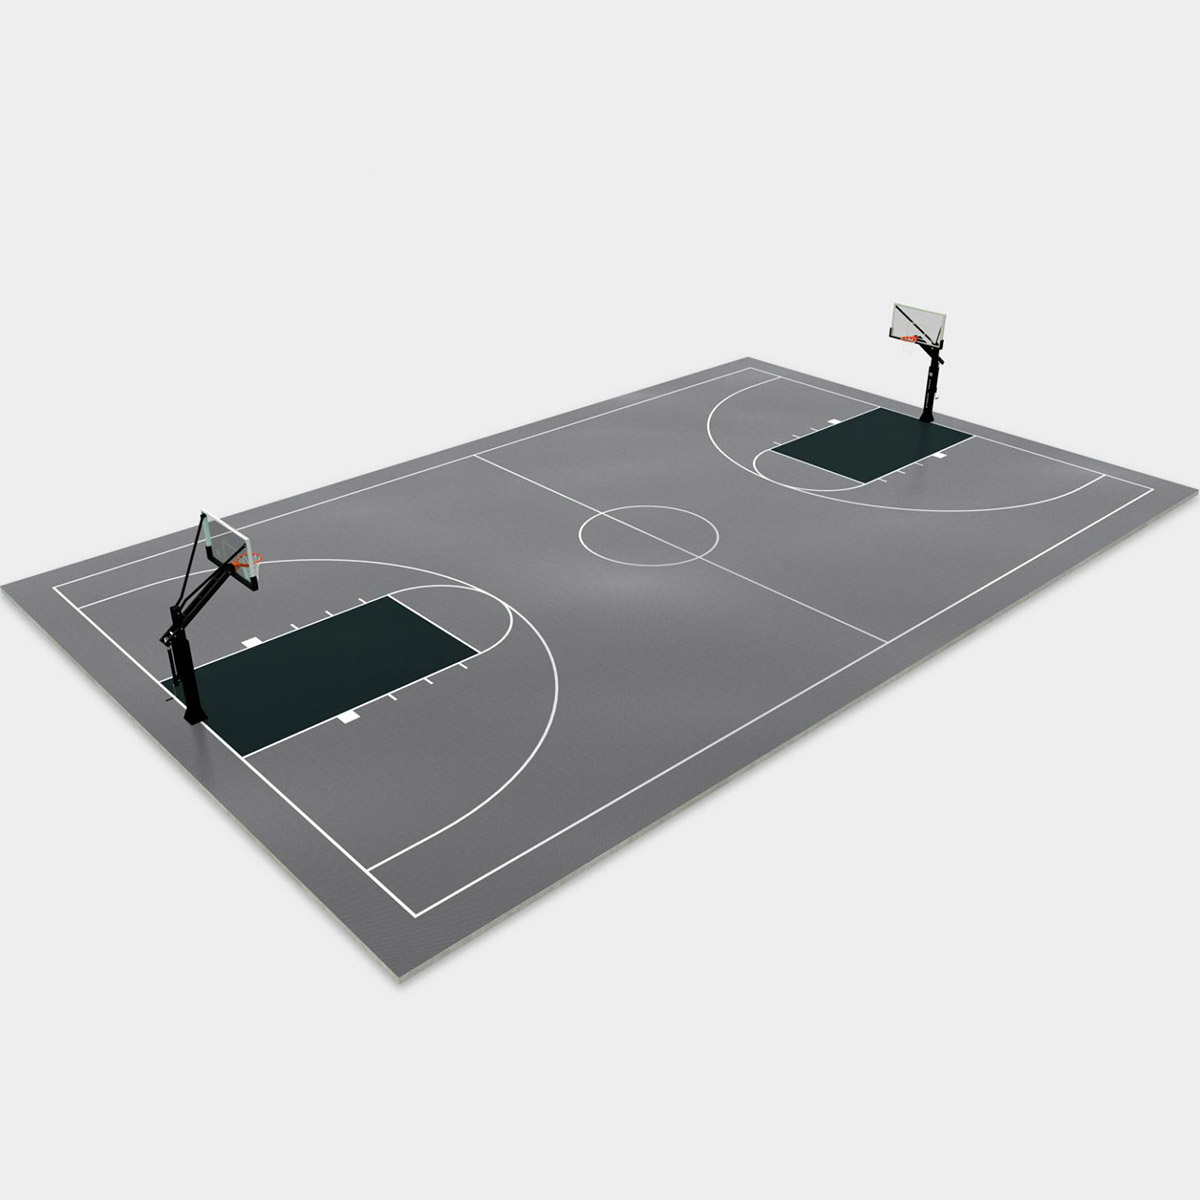 50' x 30' Basketball Half Court - DunkStar DIY Basketball Courts